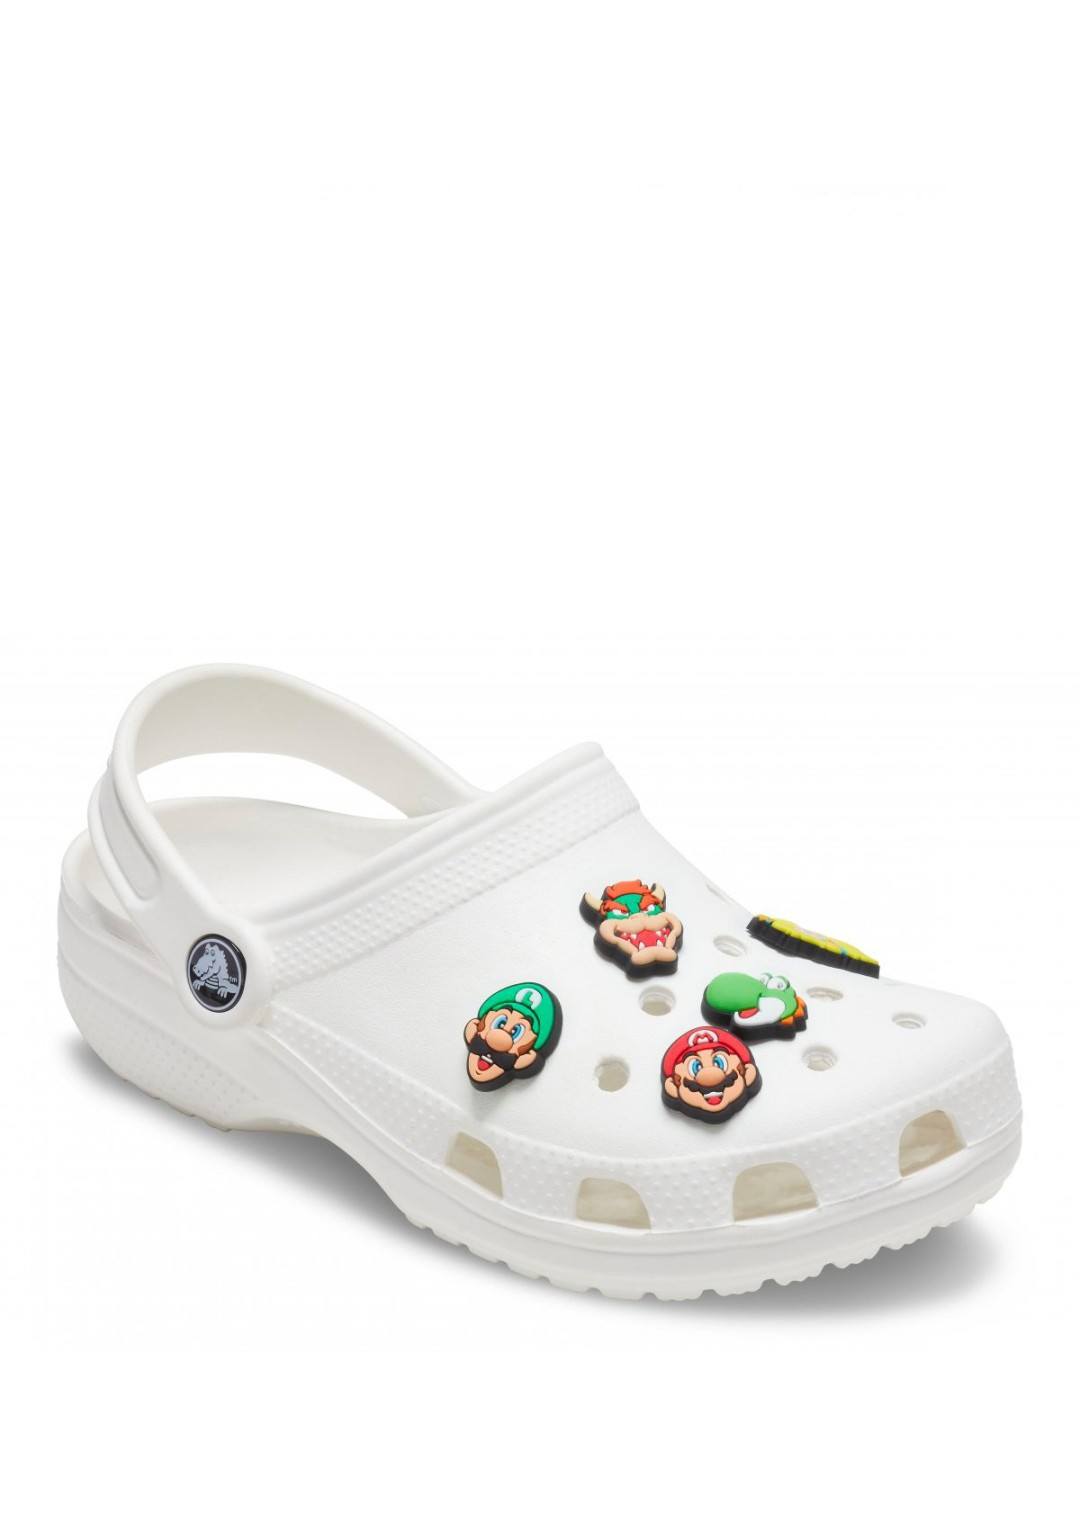 Crocs - Super Mario - Unisex bambino - 10007701